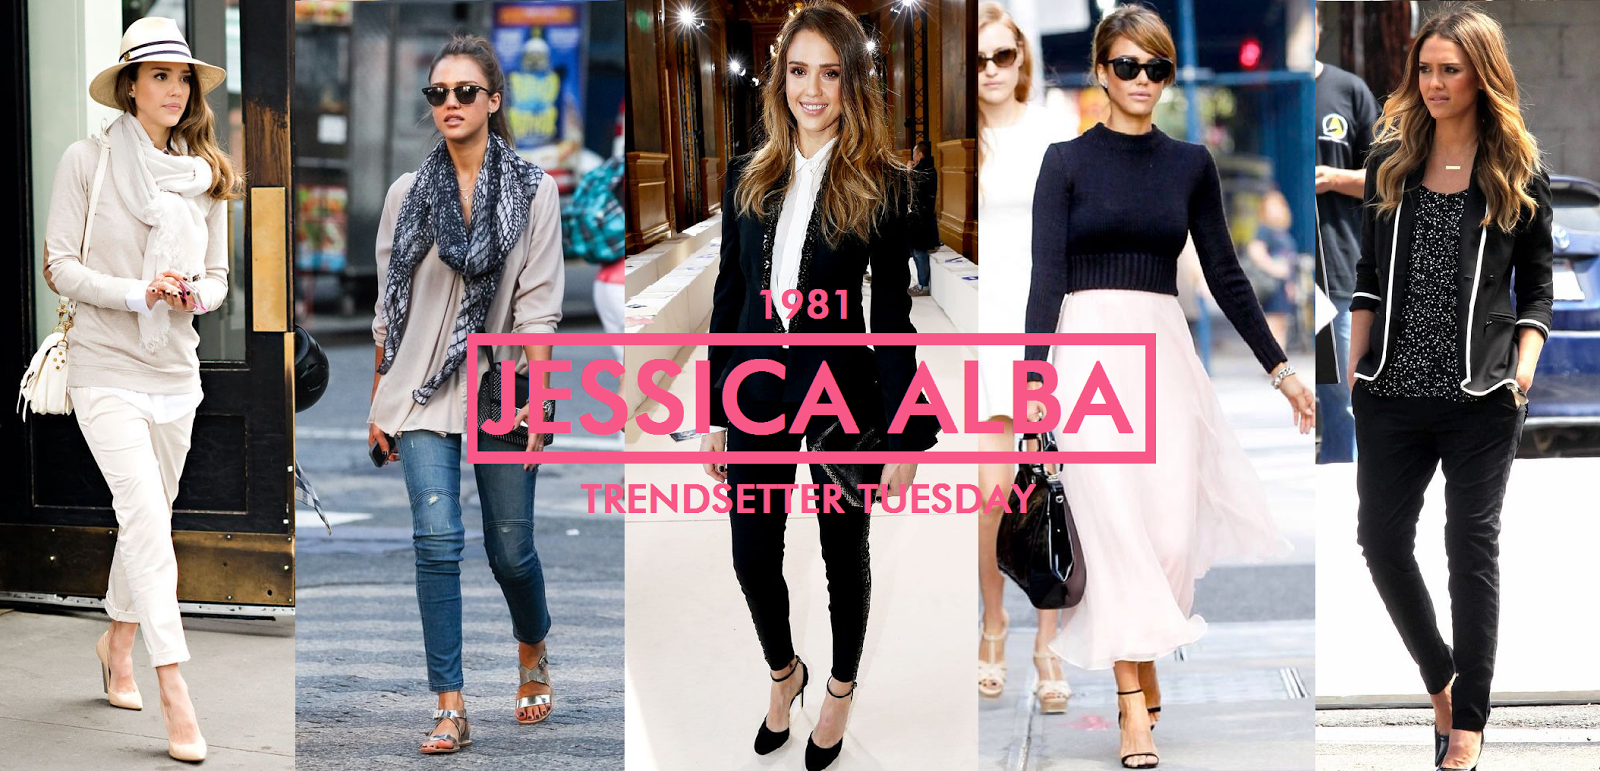 TRENDSETTER TUESDAY: JESSICA ALBA  Alright Sunshine - UK Fashion